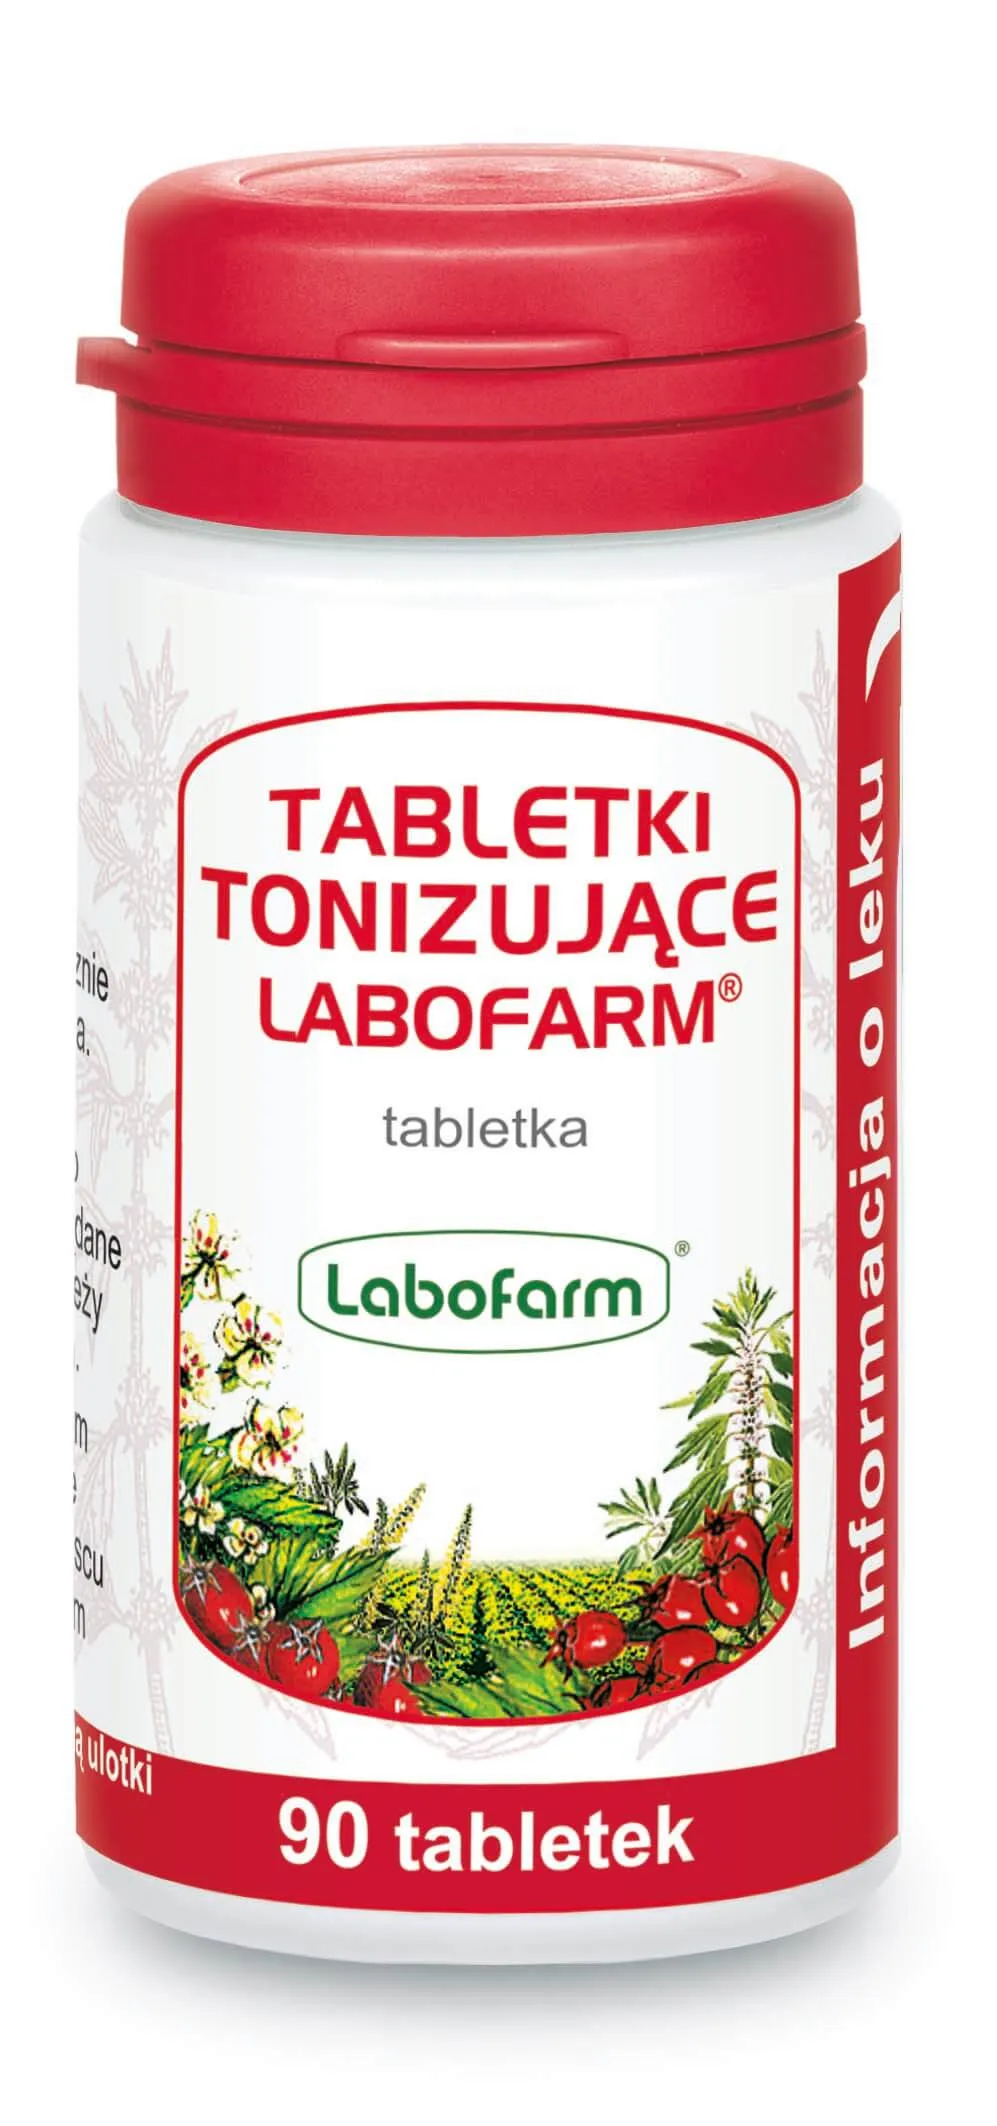 Tabletki Tonizujące Labofarm, 90 tabl.